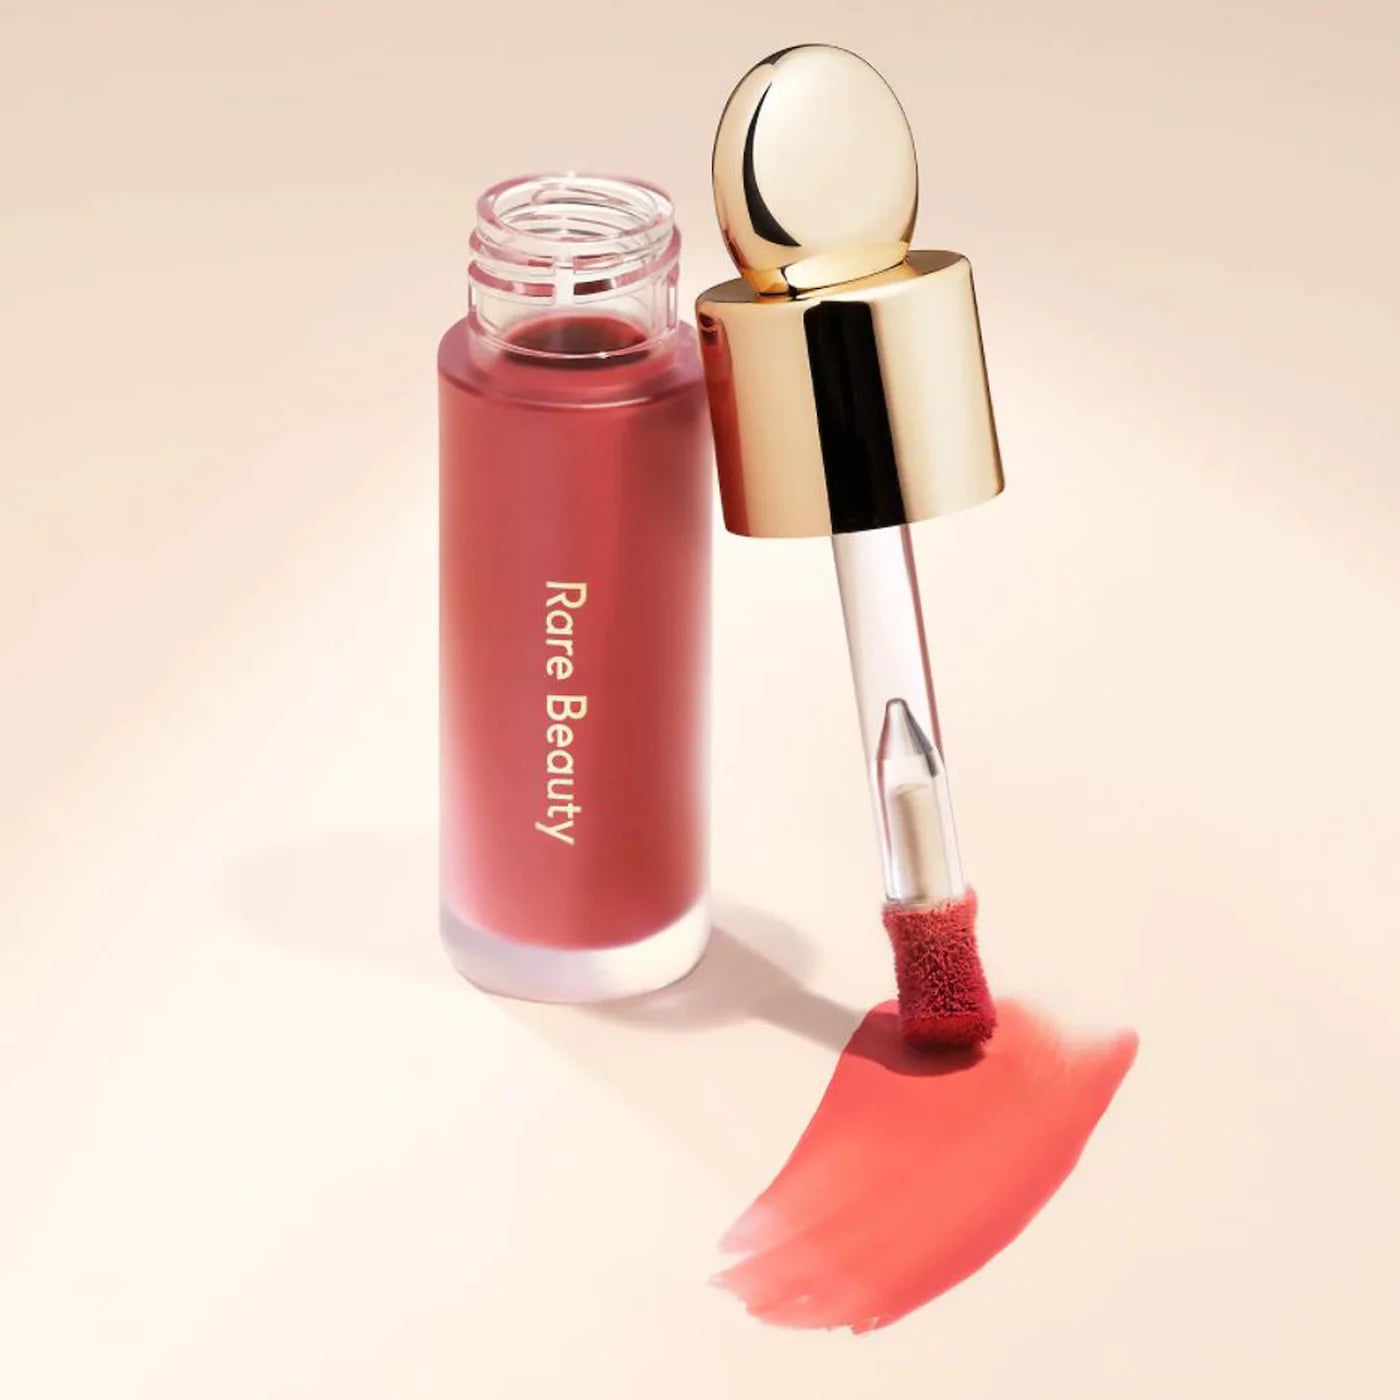 TikTok Found an Alternative Use for the Rare Beauty Liquid Blush